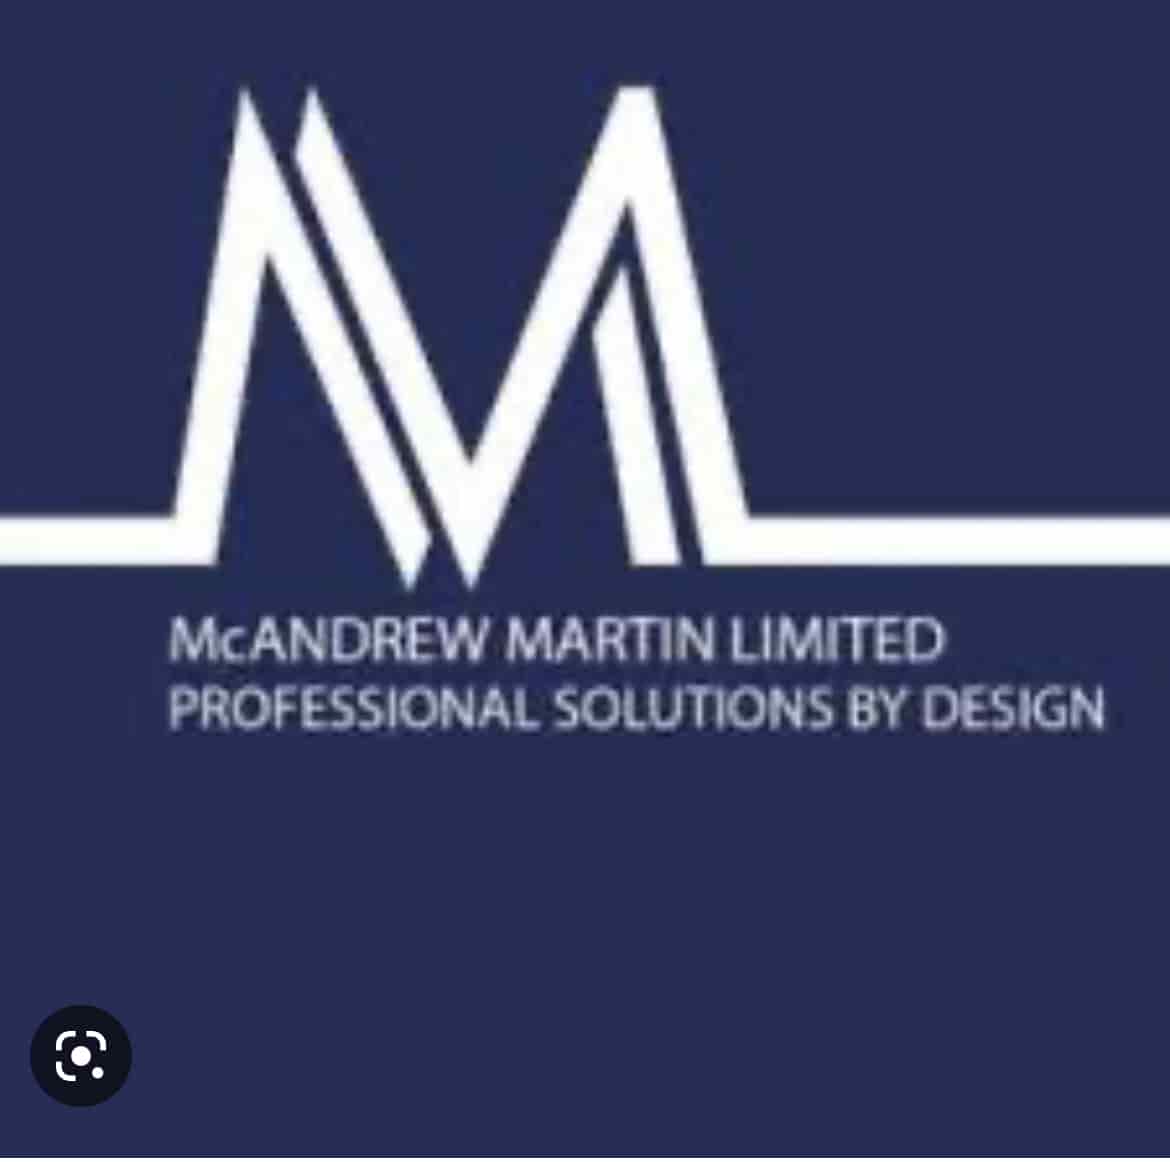 McAndrew Martin Limited